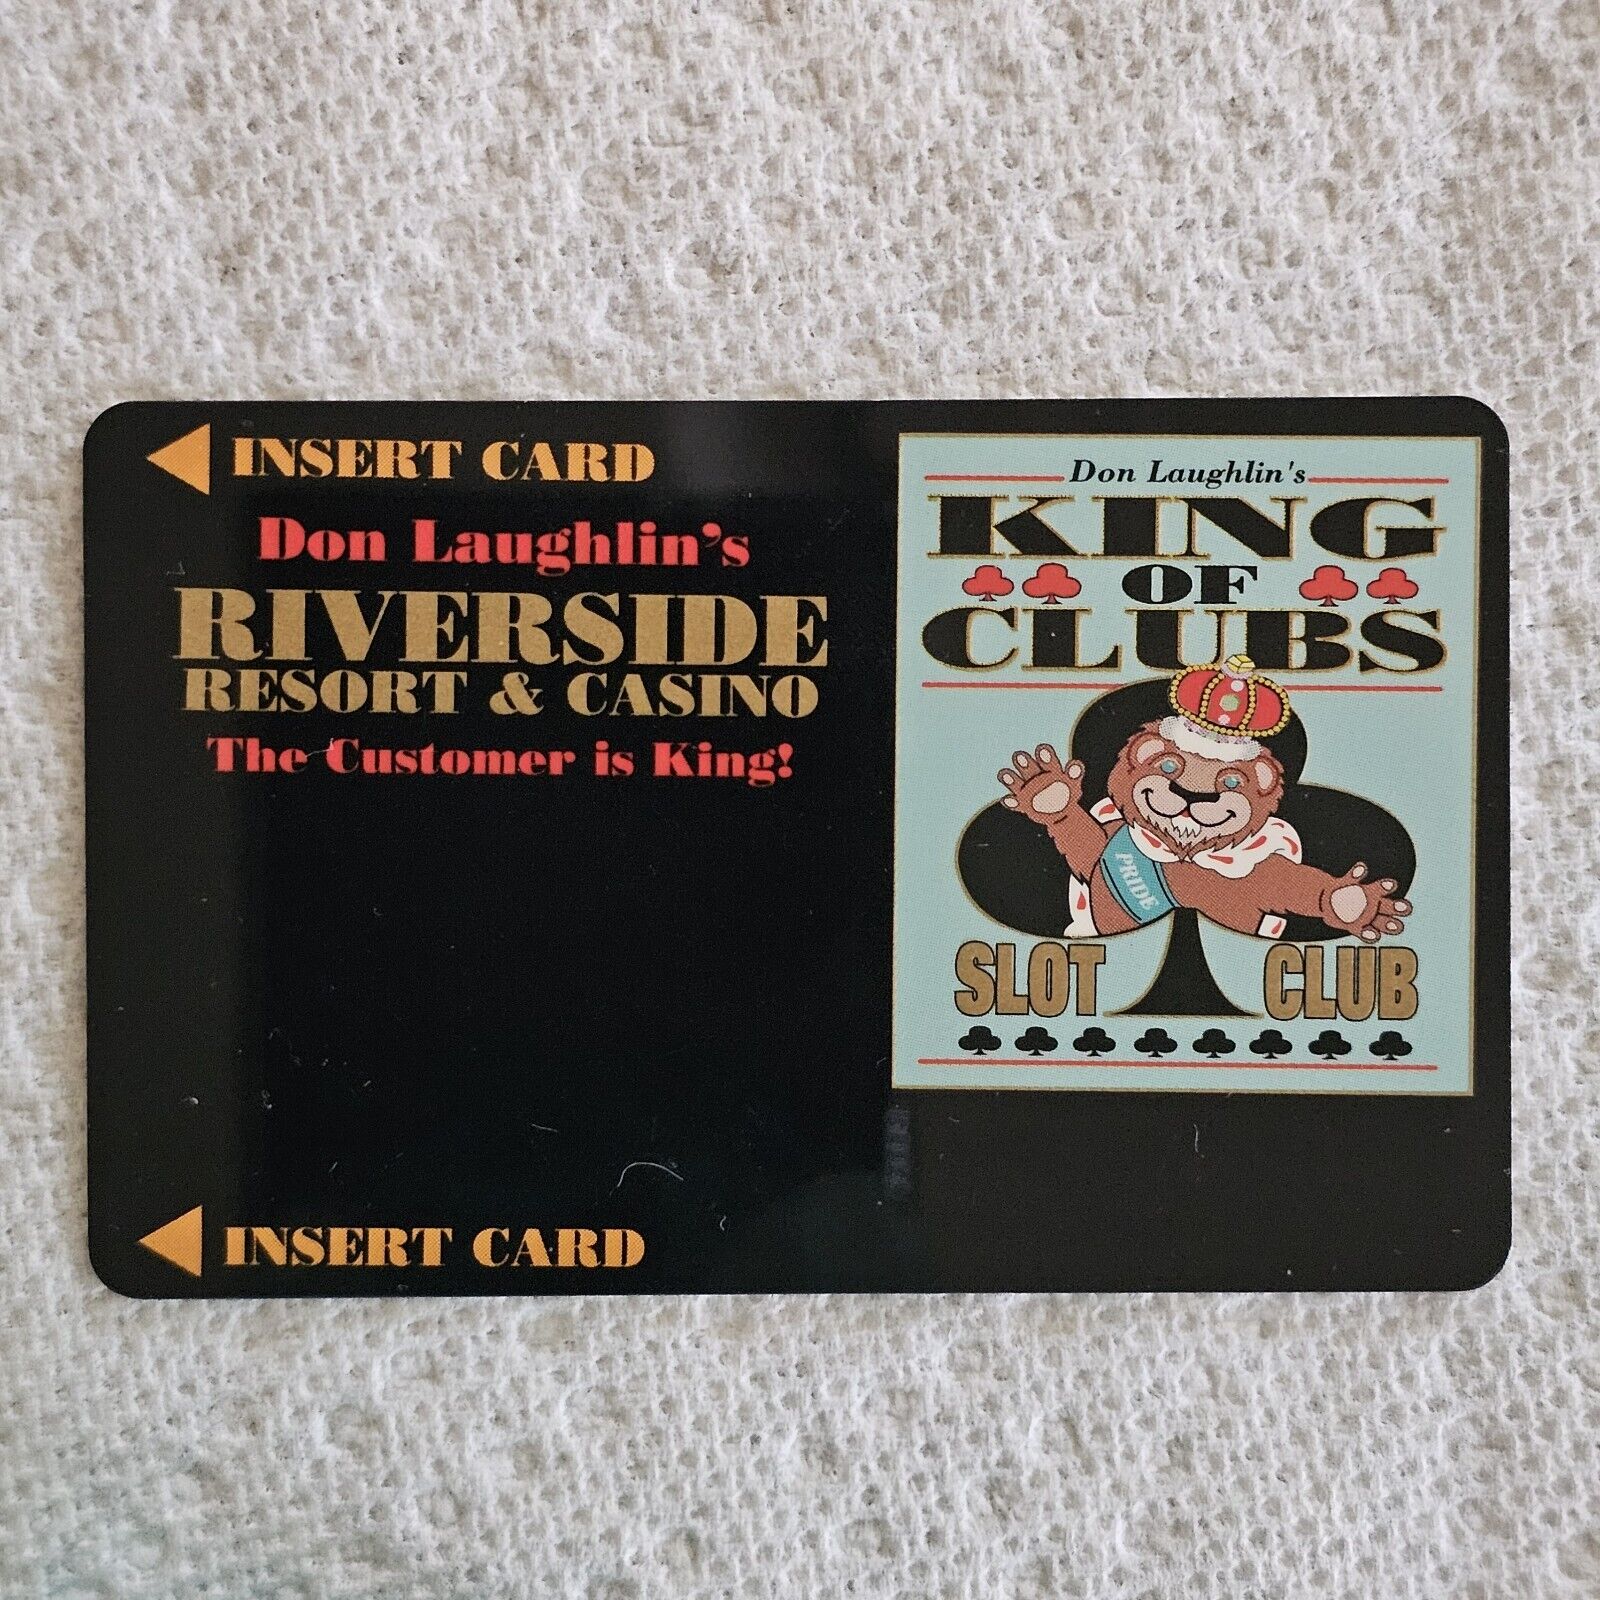 Nevada Casino Slot Card, Riverside Casino, Laughlin, NV. No Name On Front.